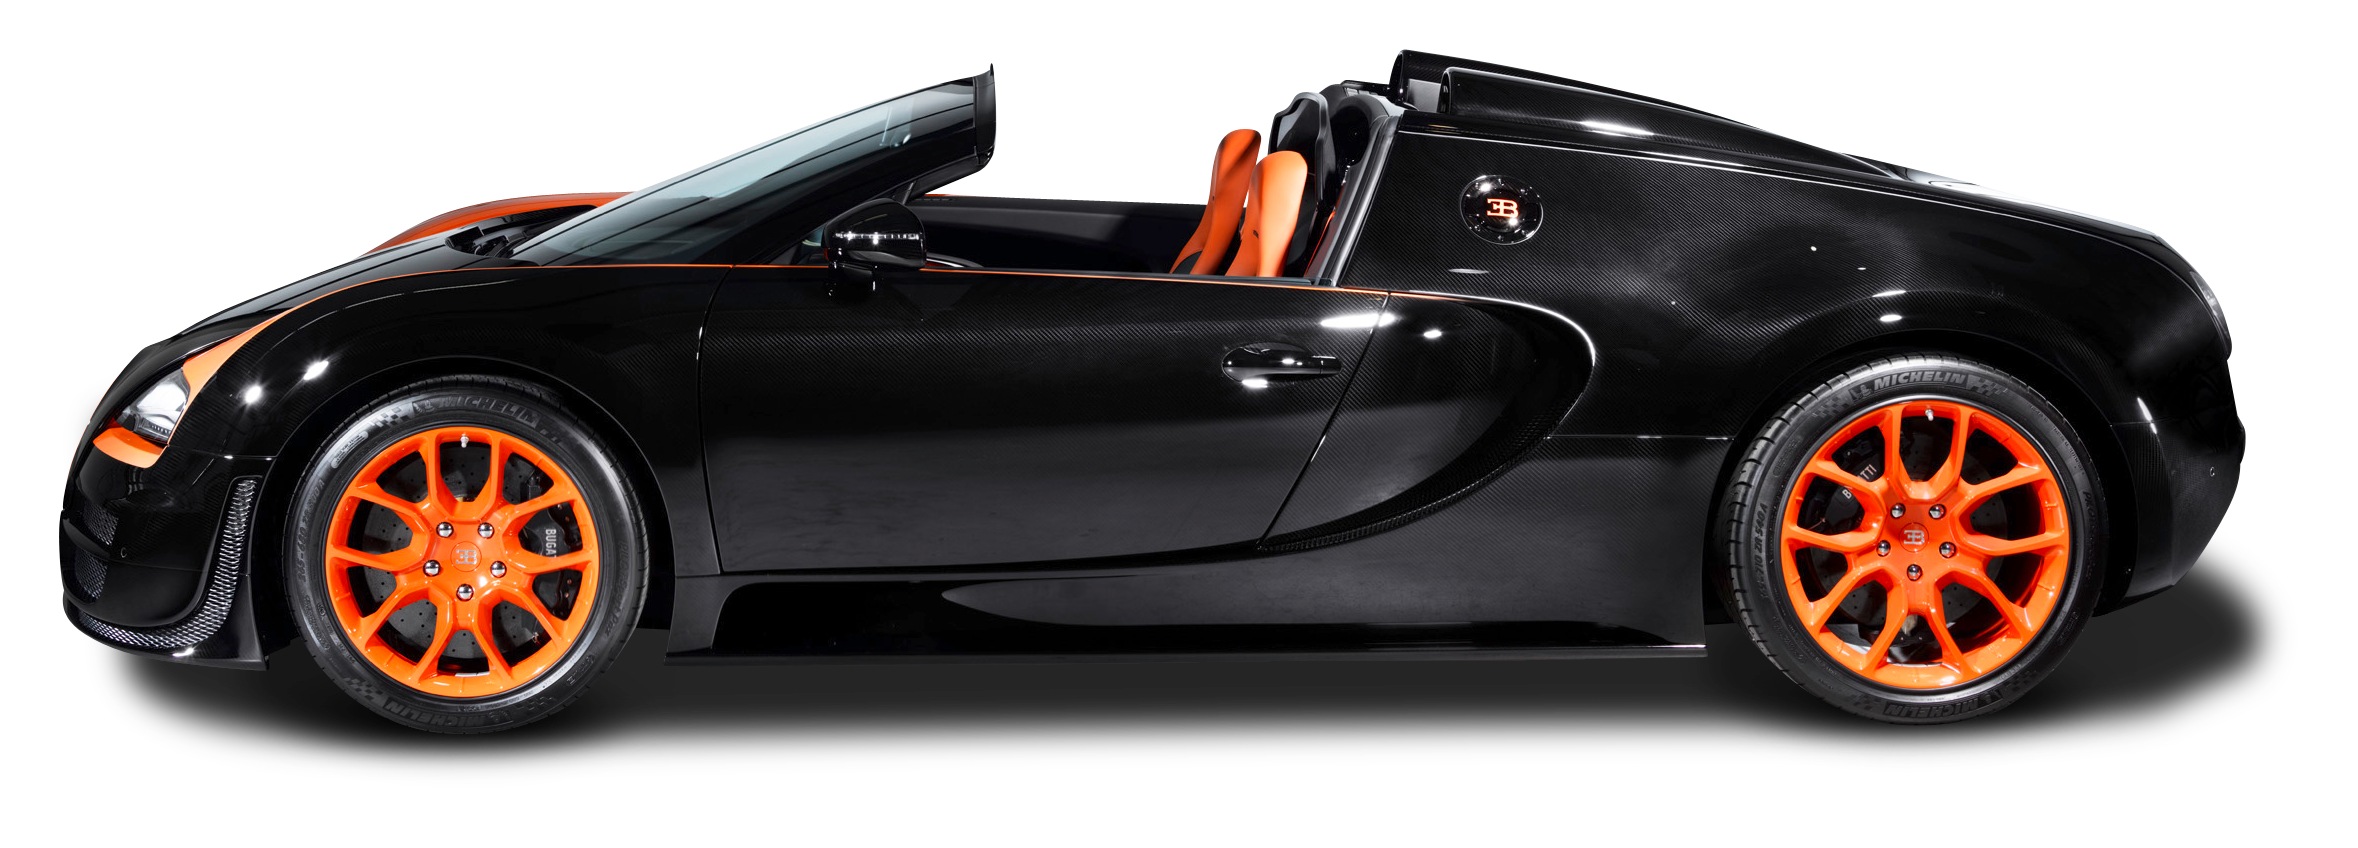 A Black Sports Car With Orange Seats